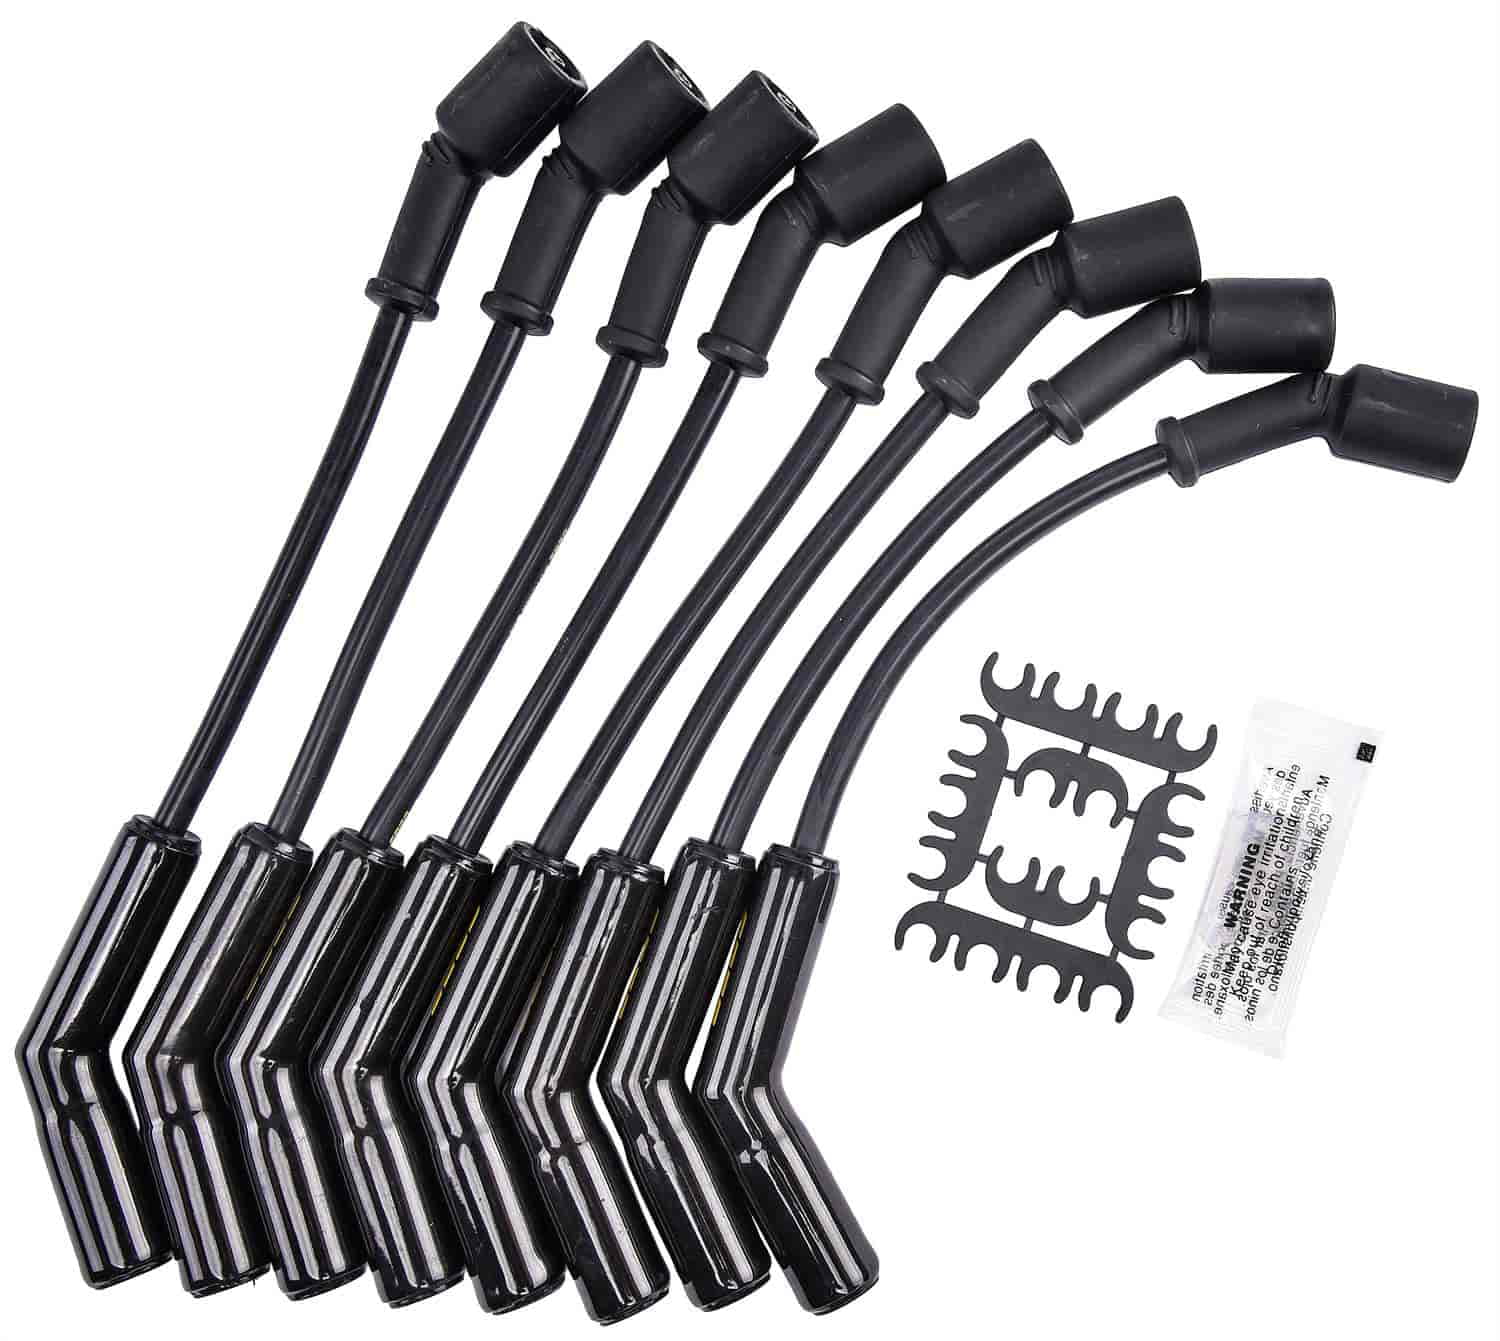 AC PERFORMANCE 90 Degree Black Ceramic Spark Plug Boot Kits Fit 8 mm Wires